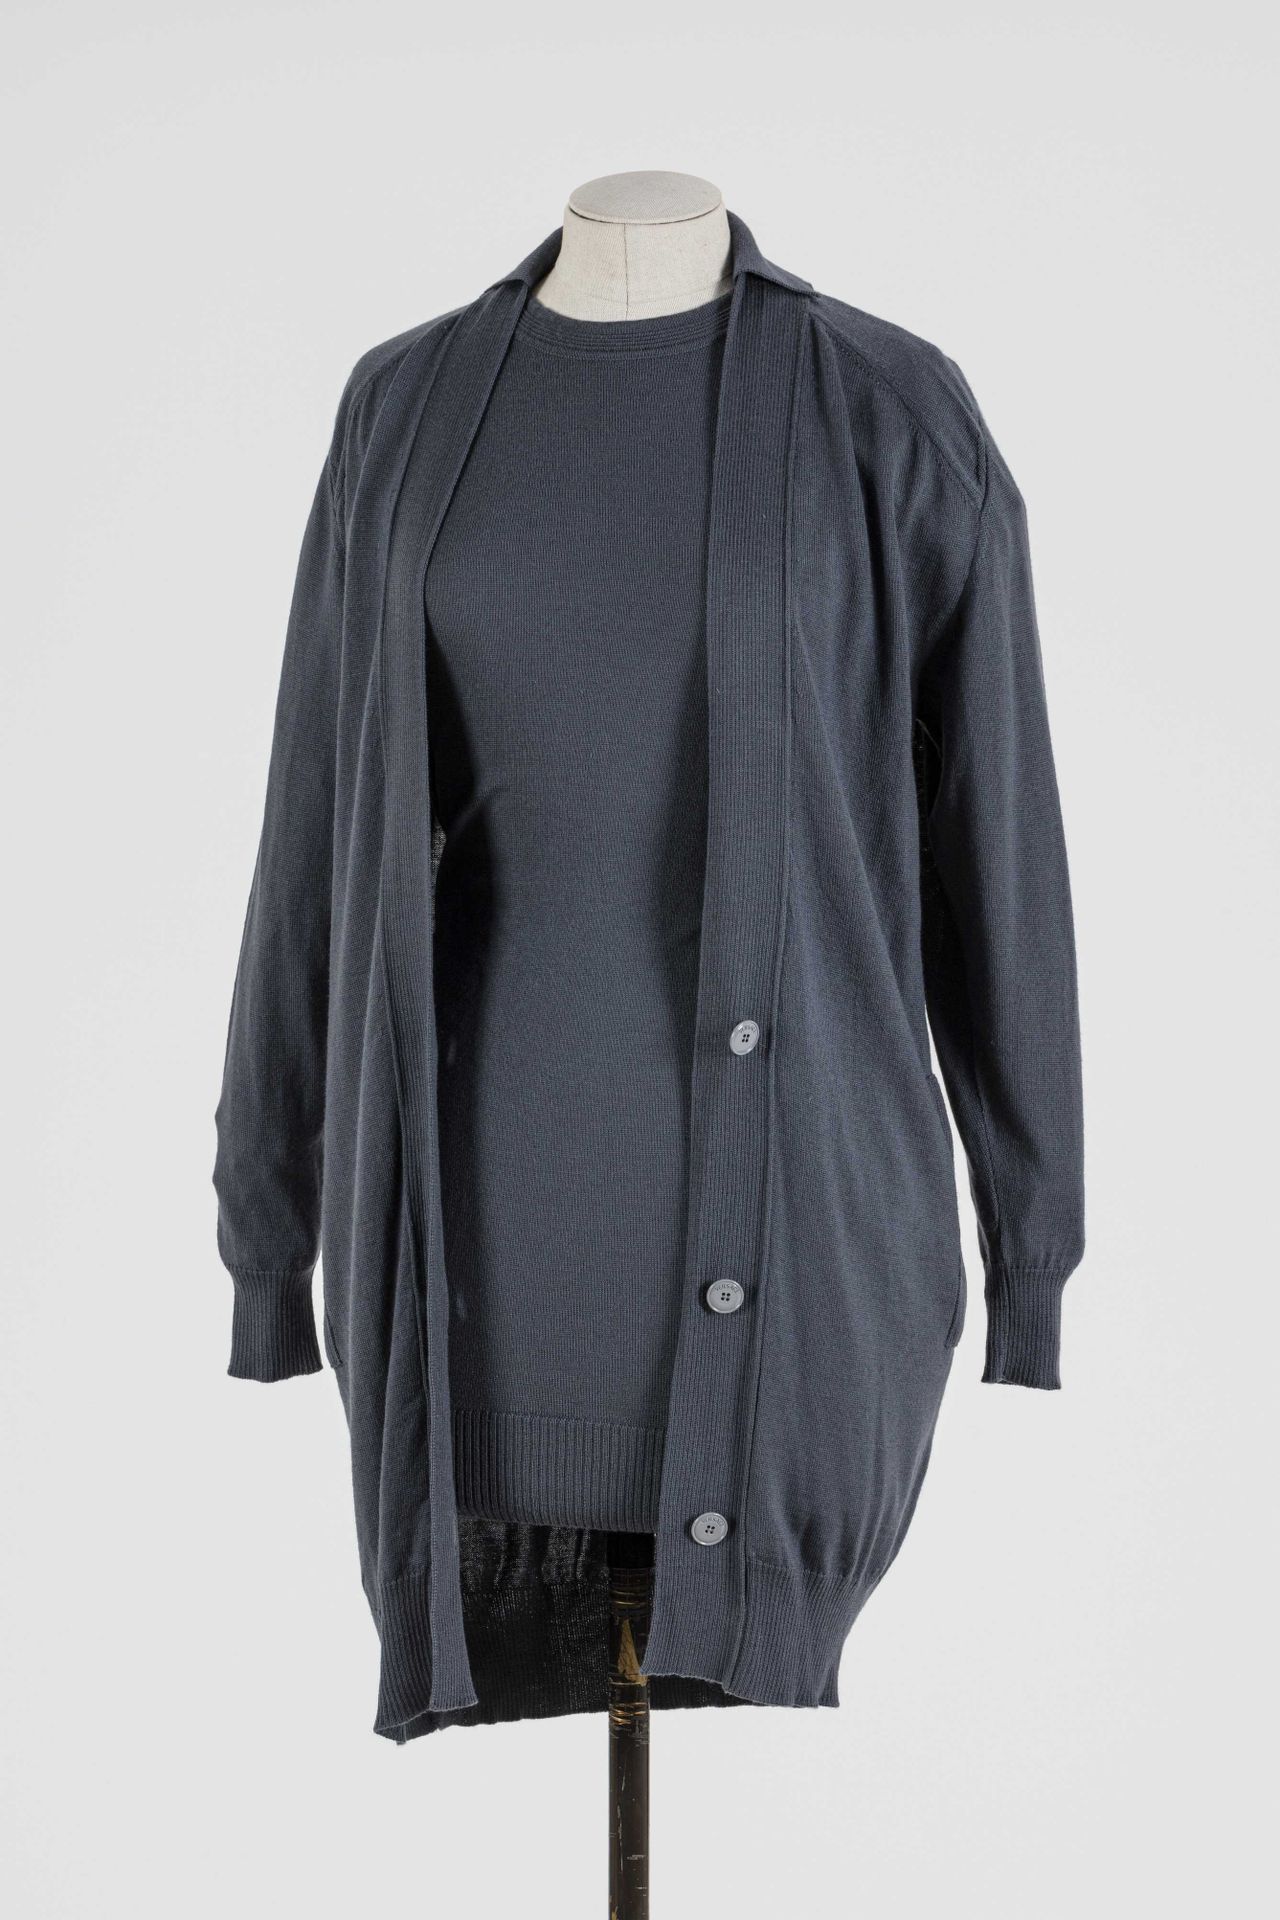 Null VERSACE：灰色羊毛套装，包括一件短裙，短袖，圆领，和一件长马甲，长袖，单胸。

T.38